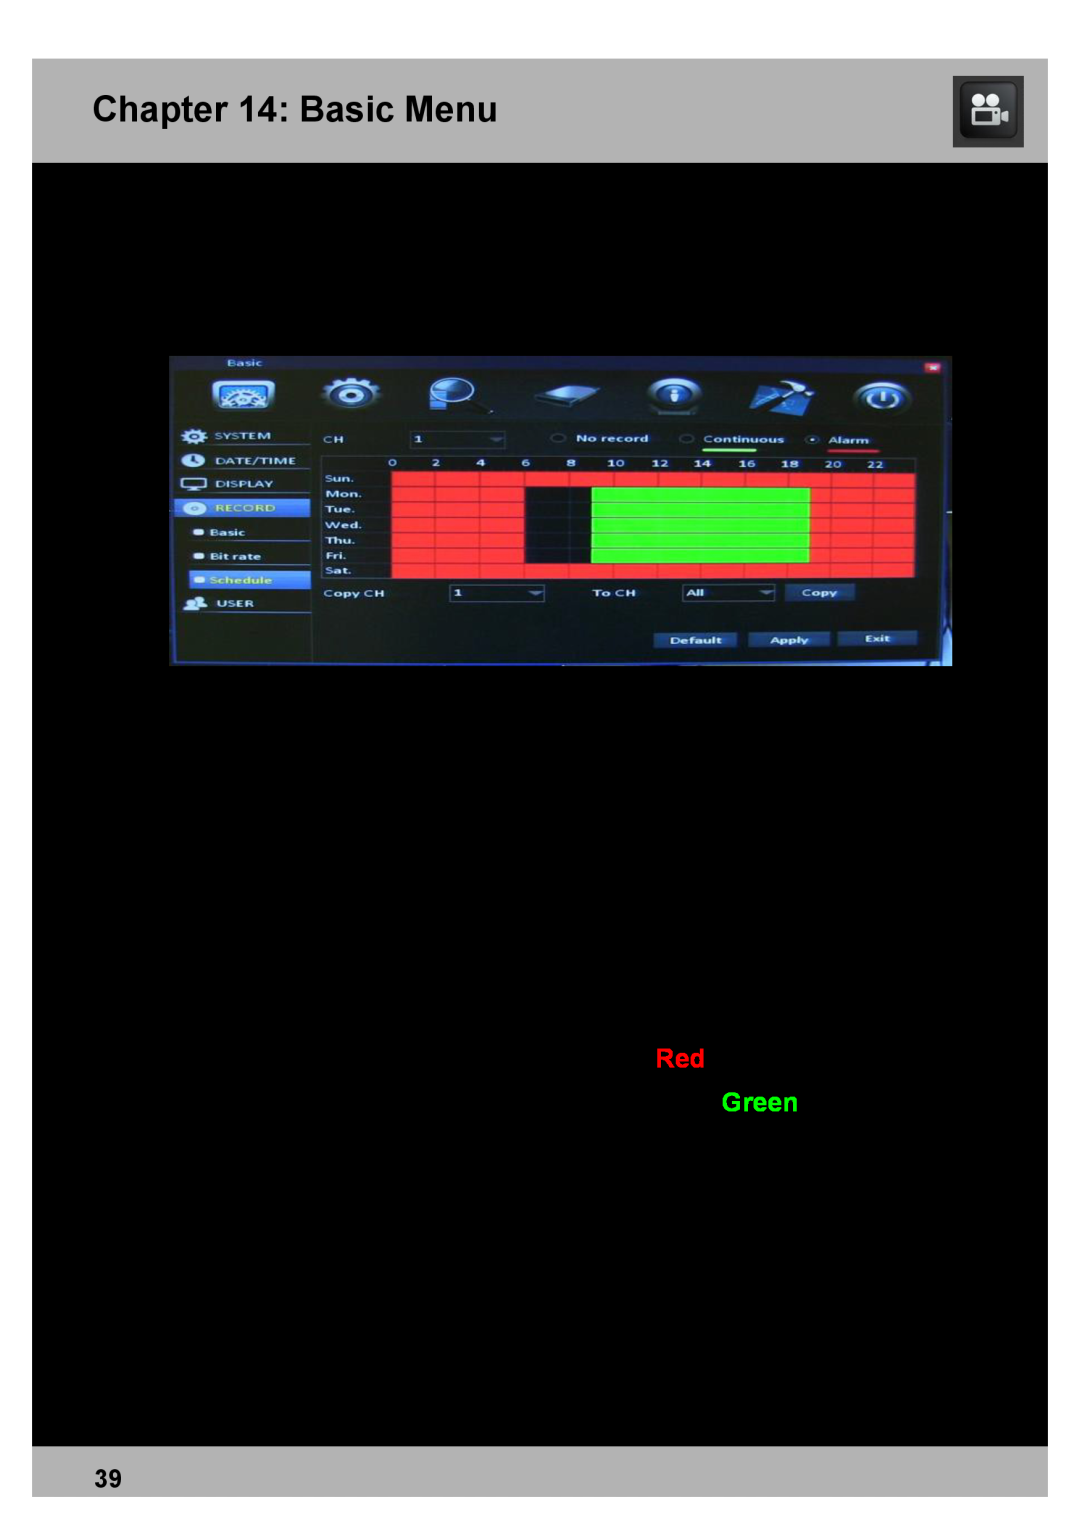 Night Owl Optics DVR Security Kit, Elite Series 8CH, PRO Series 8CH manual Schedule Menu, •Recording Types, Basic Menu 